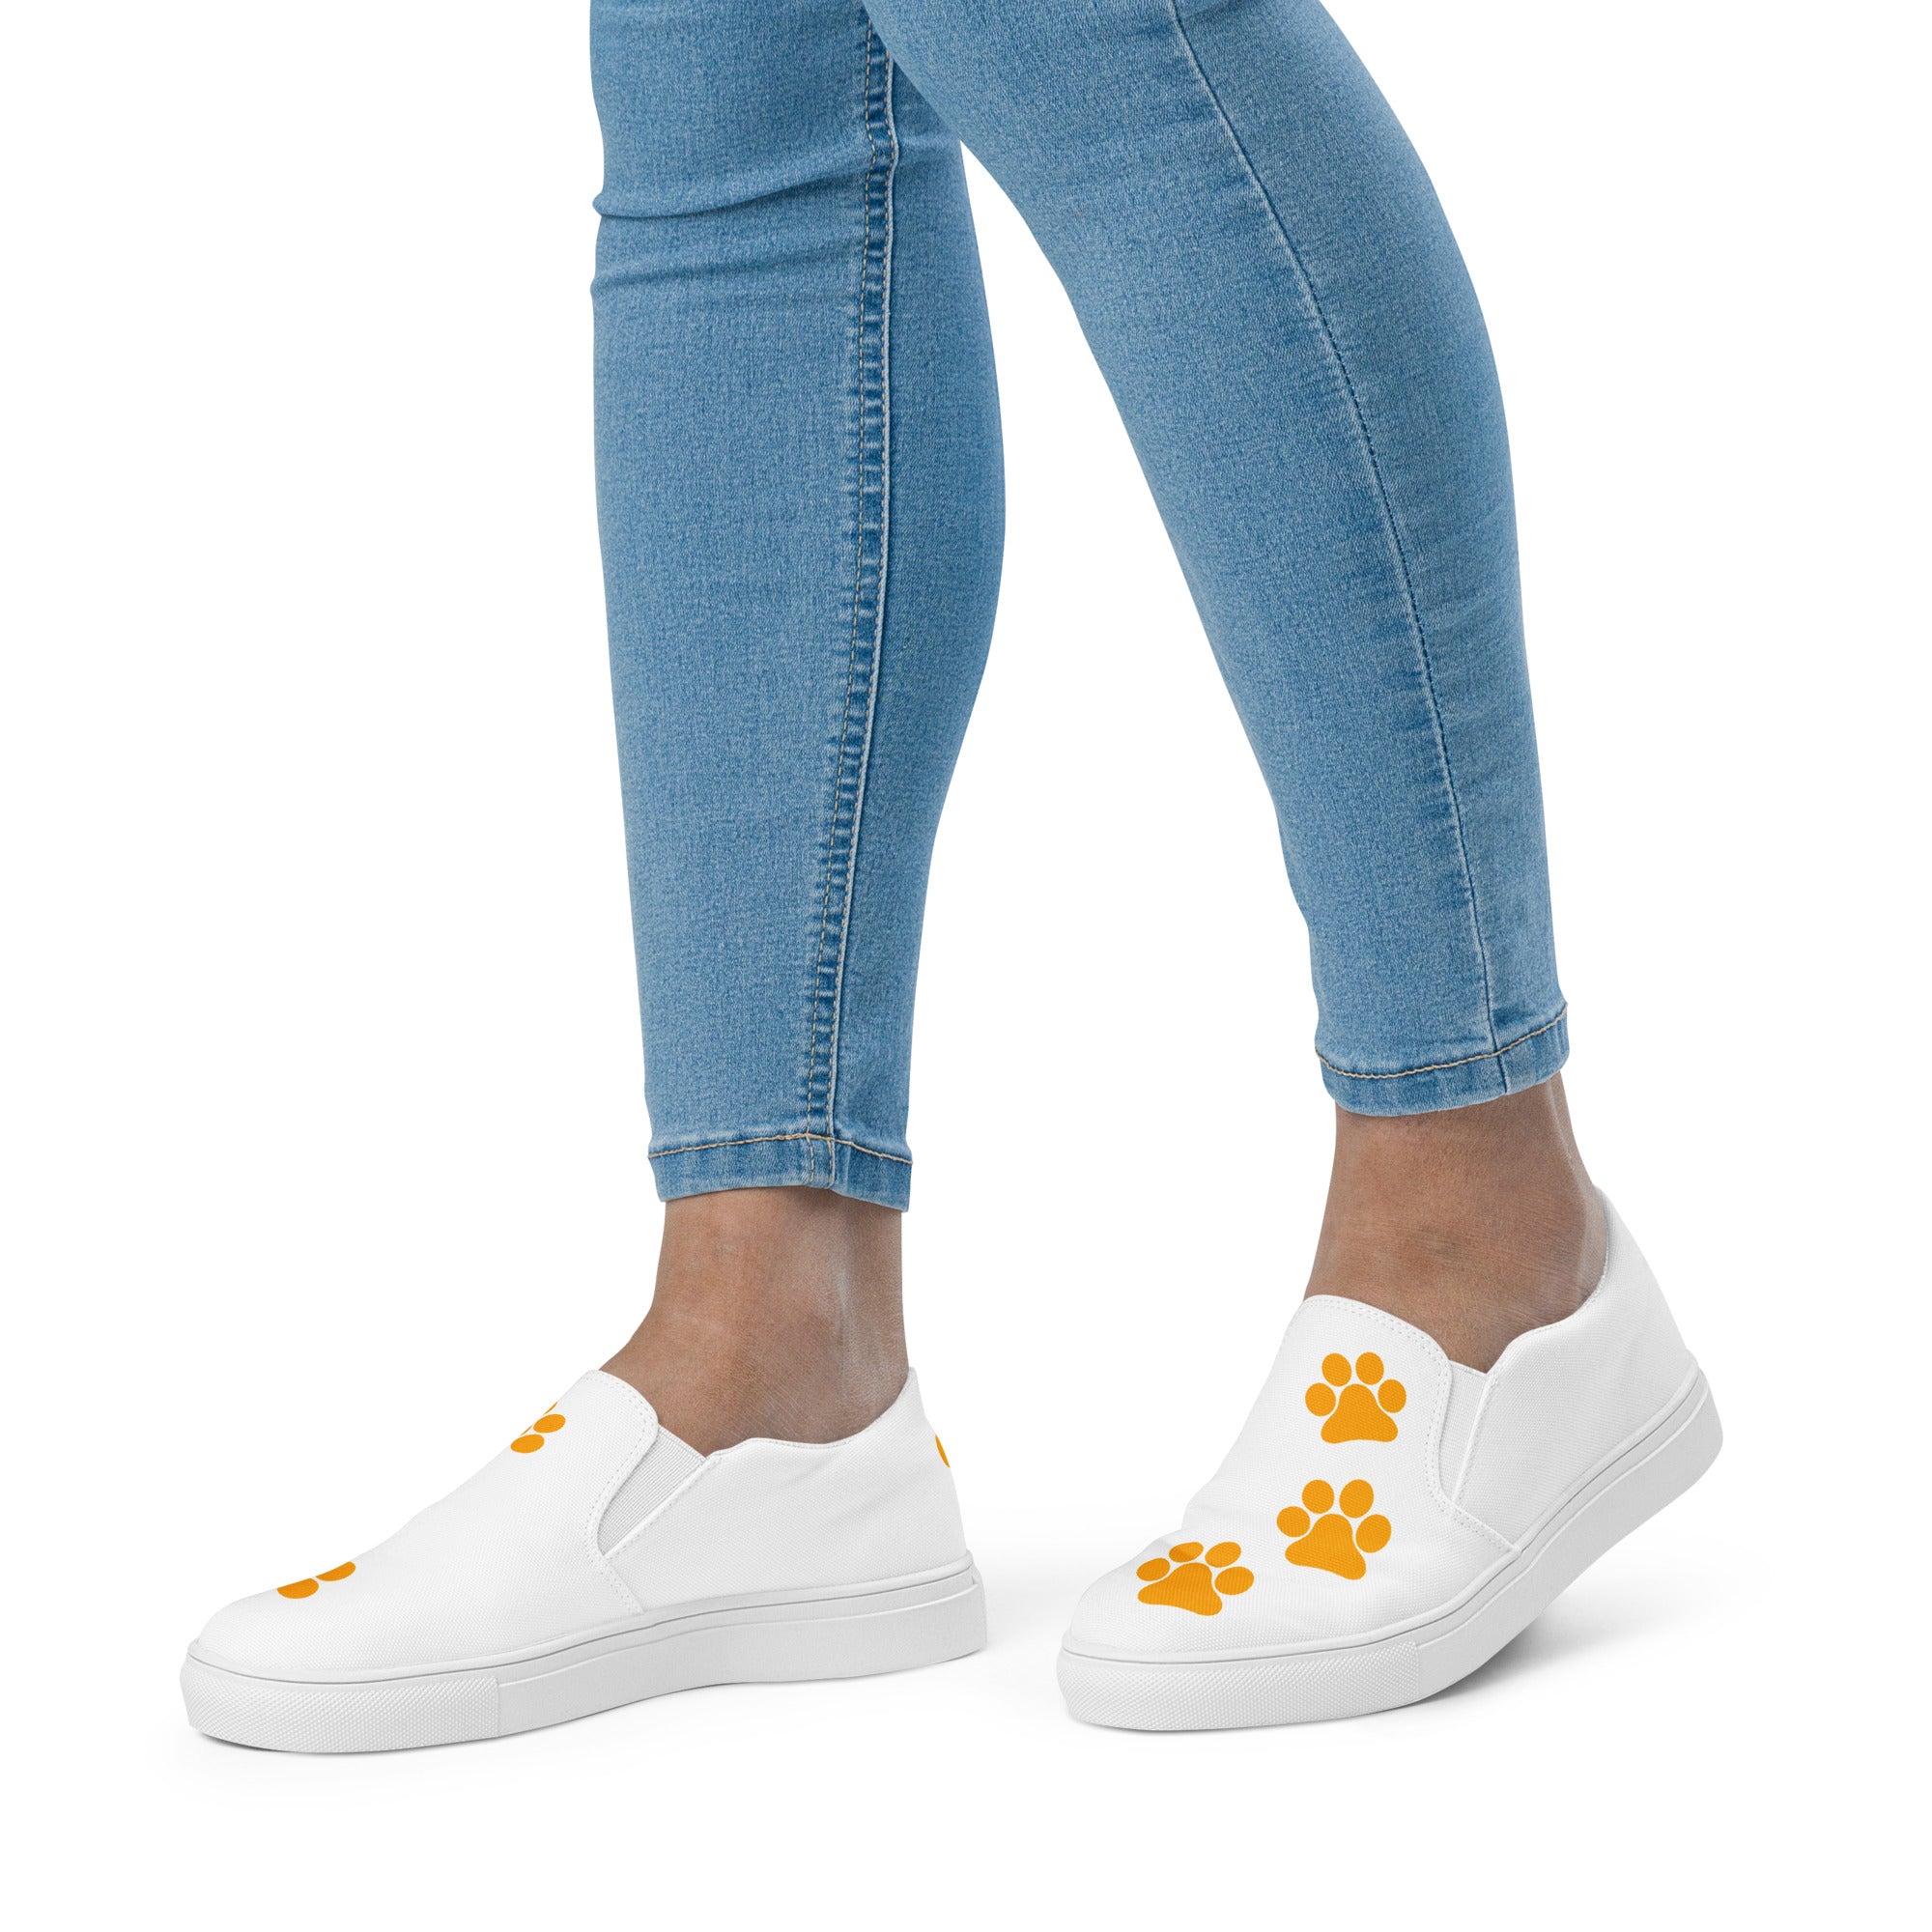 Women’s slip-on Orange Paw shoes